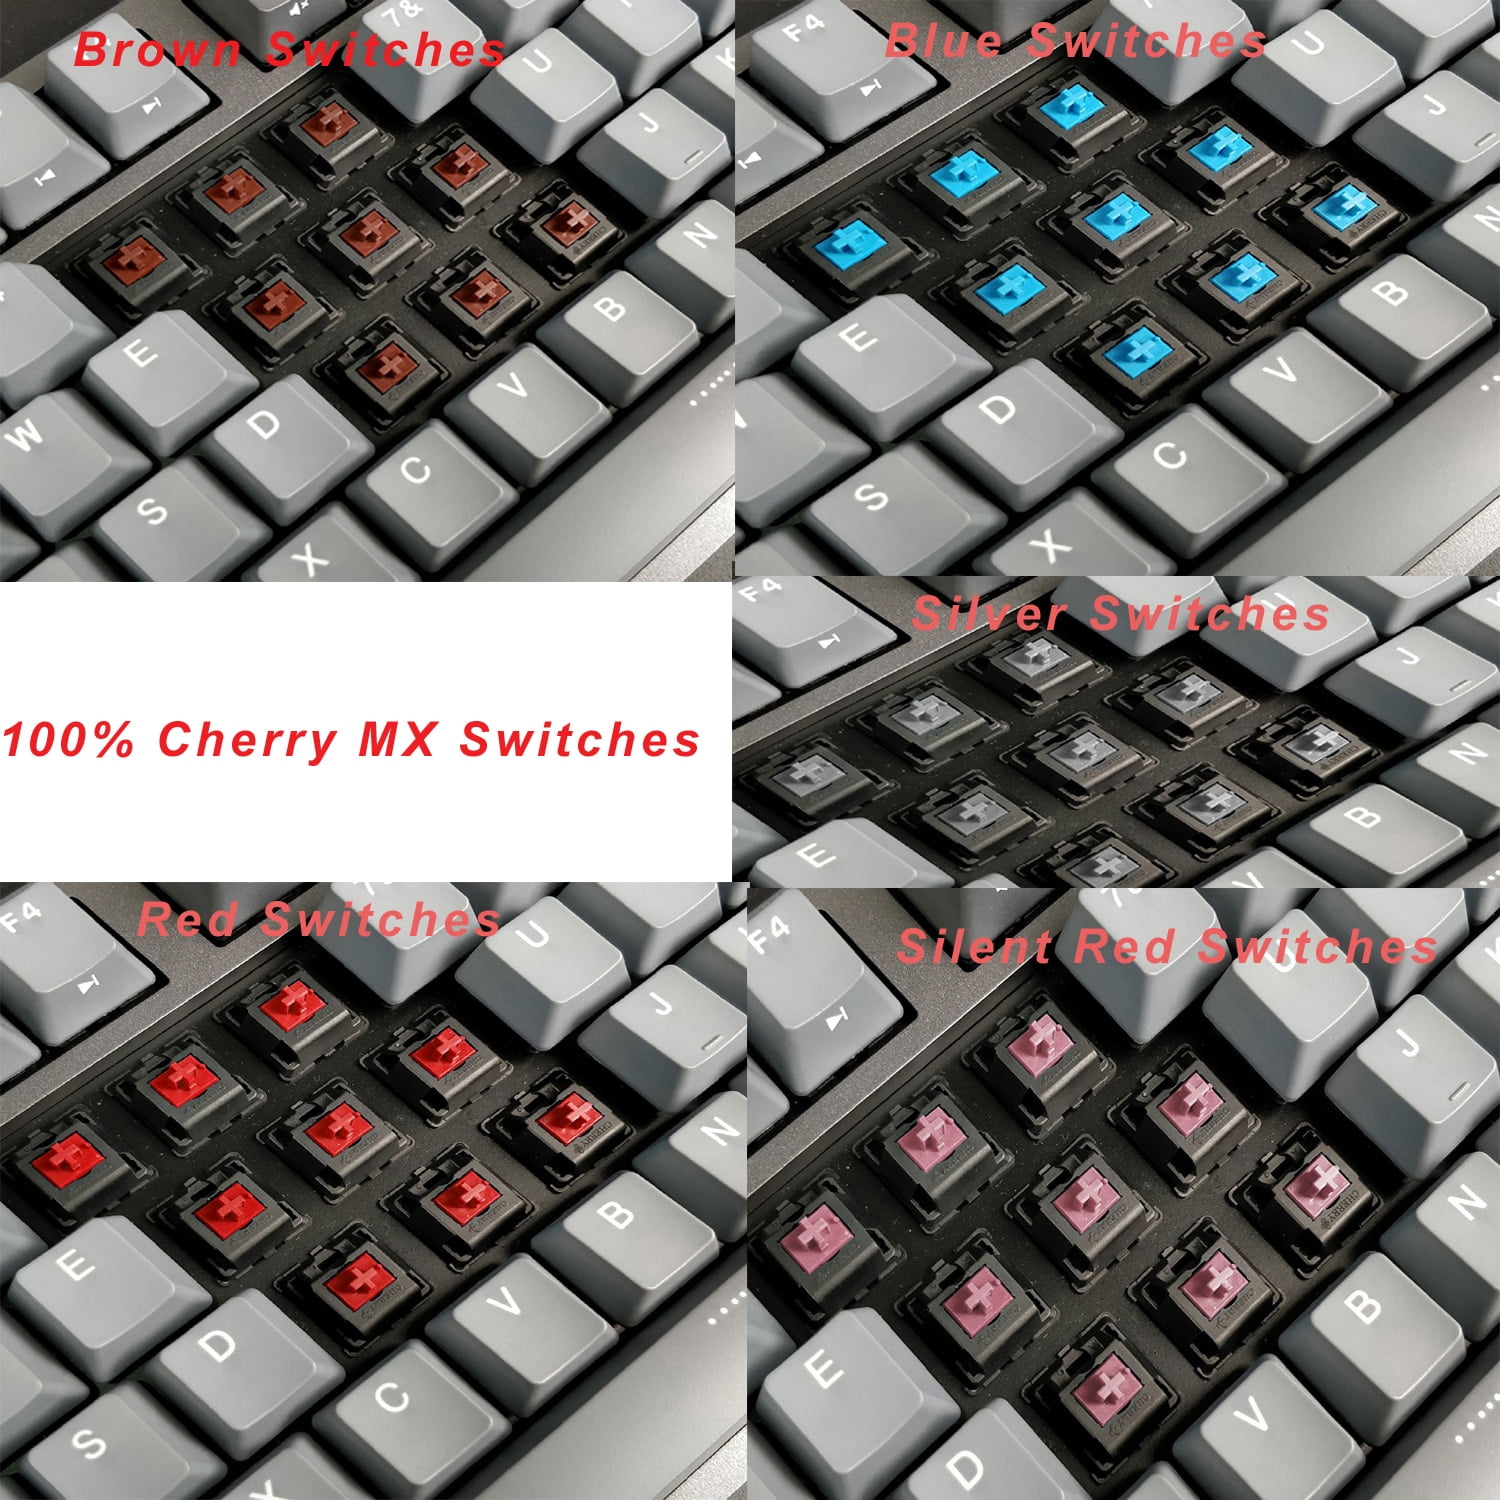 DURGOD TAURUS K320 Mechanical Keyboard [Cherry MX Switches] NKRO 87-Key Gaming Keyboard for Gamer/Typist/Office - QWERTY-Layout